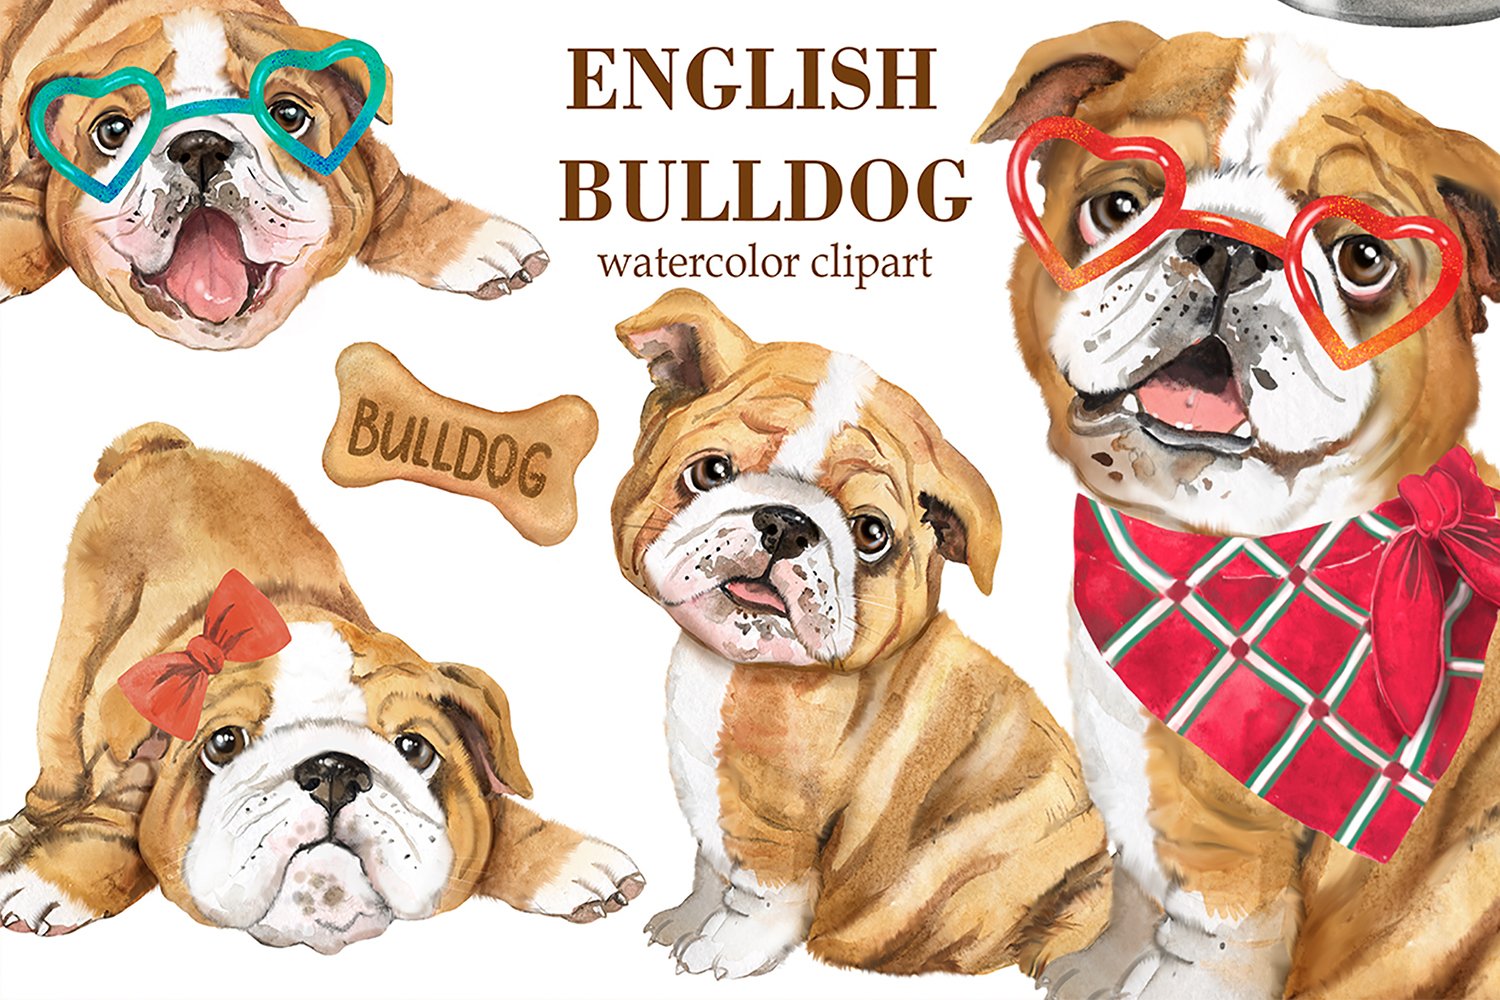 English bulldog watercolor clipart.